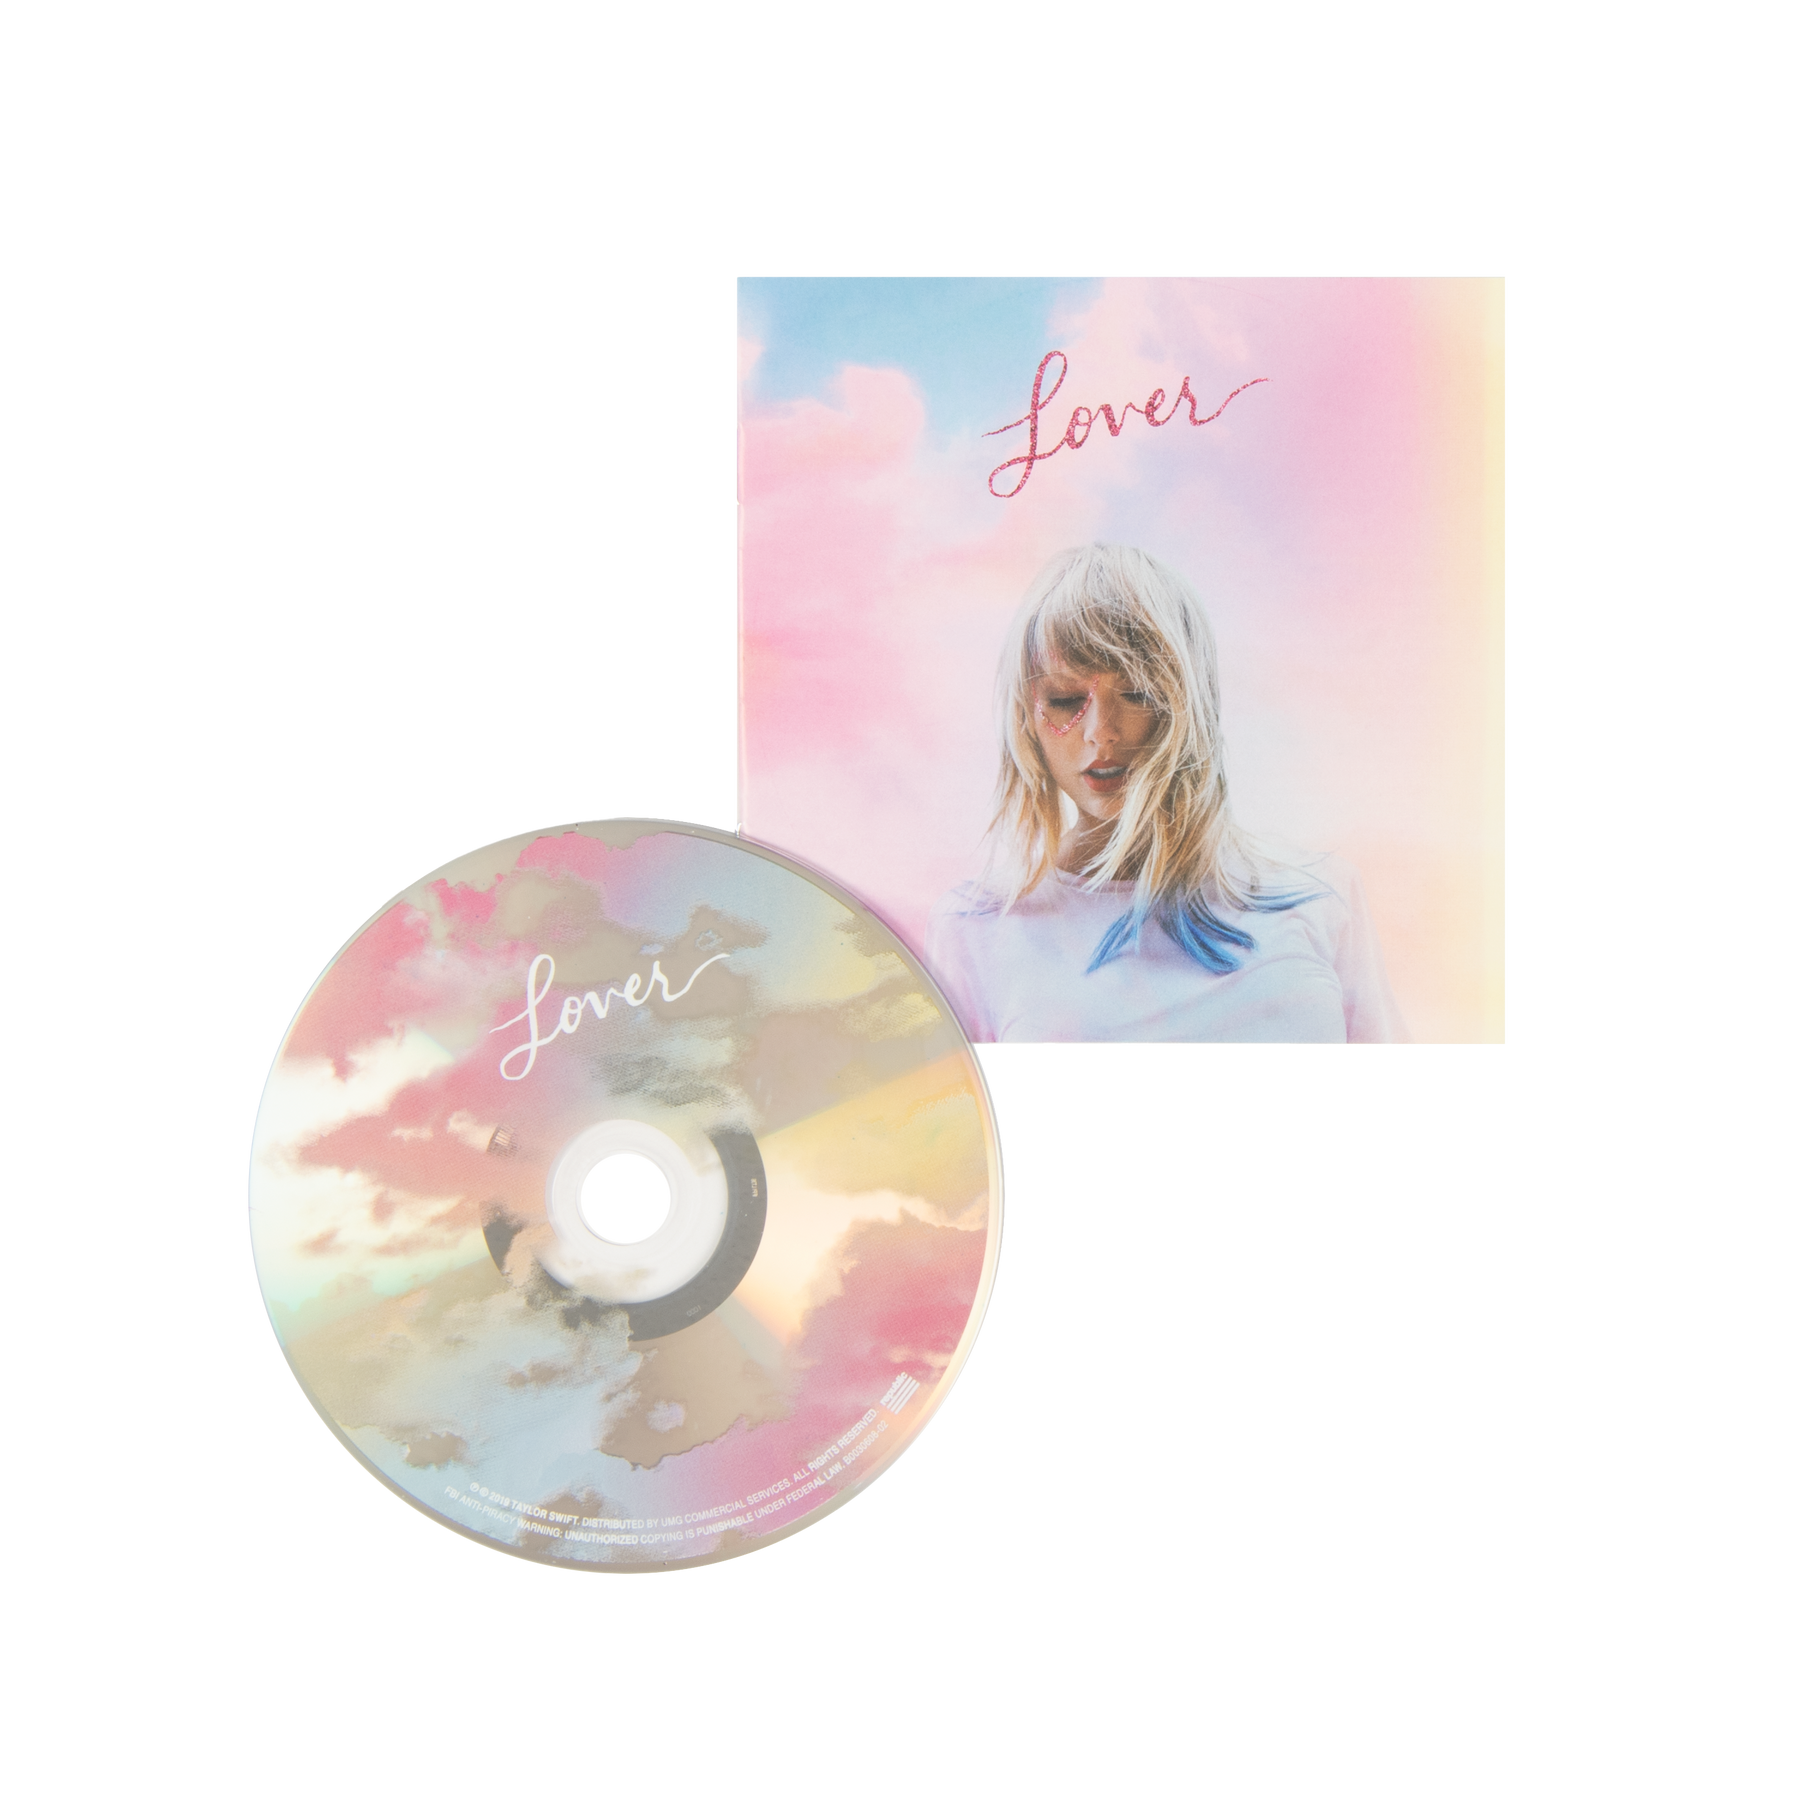 Taylor Swift - Lover CD Deluxe Version 2 – RepDiscosPeru